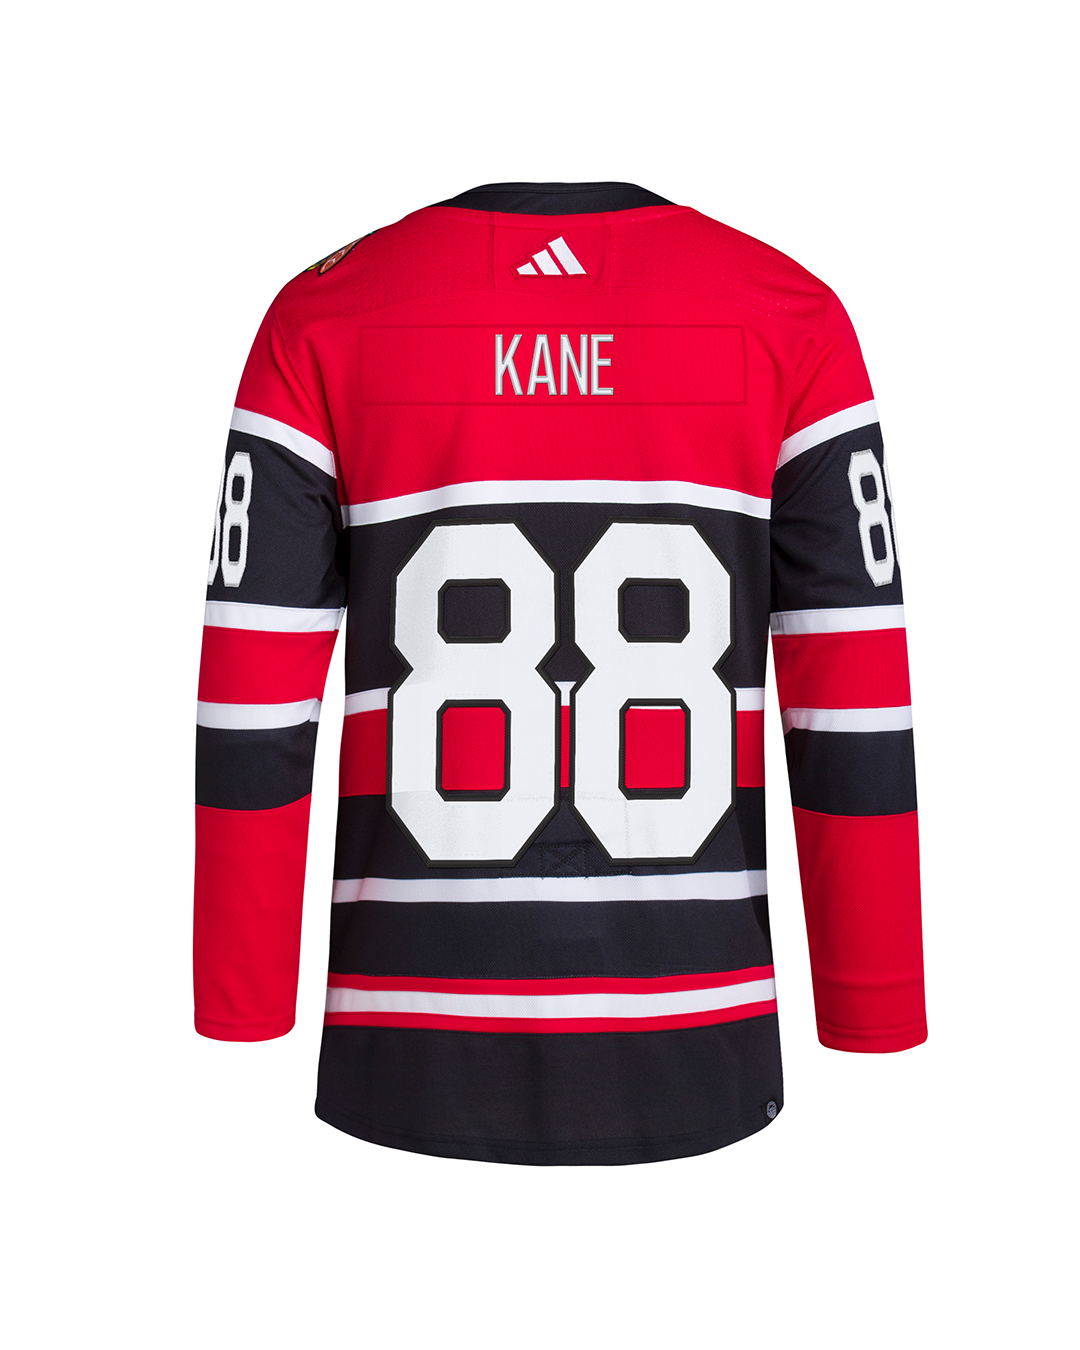  NHL Men's Chicago Blackhawks Patrick Kane Jersey Tee